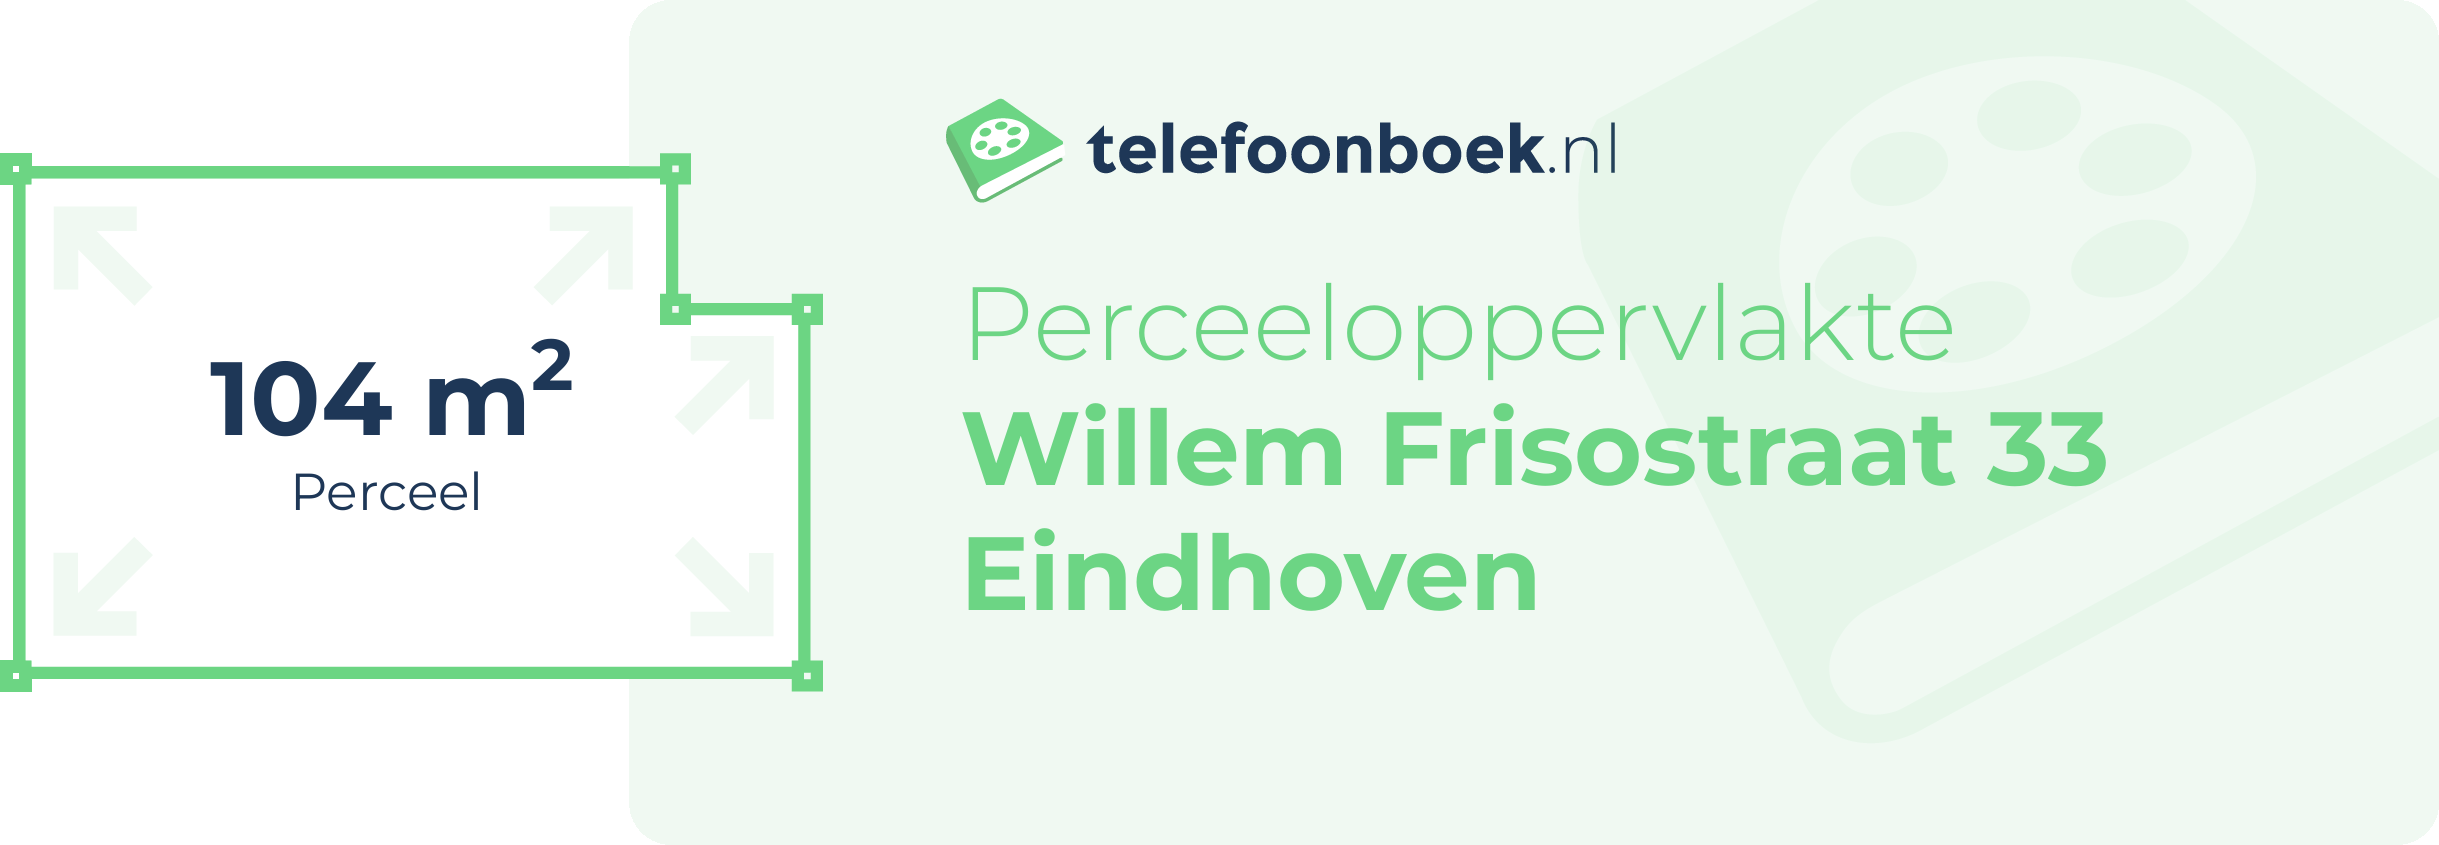 Perceeloppervlakte Willem Frisostraat 33 Eindhoven